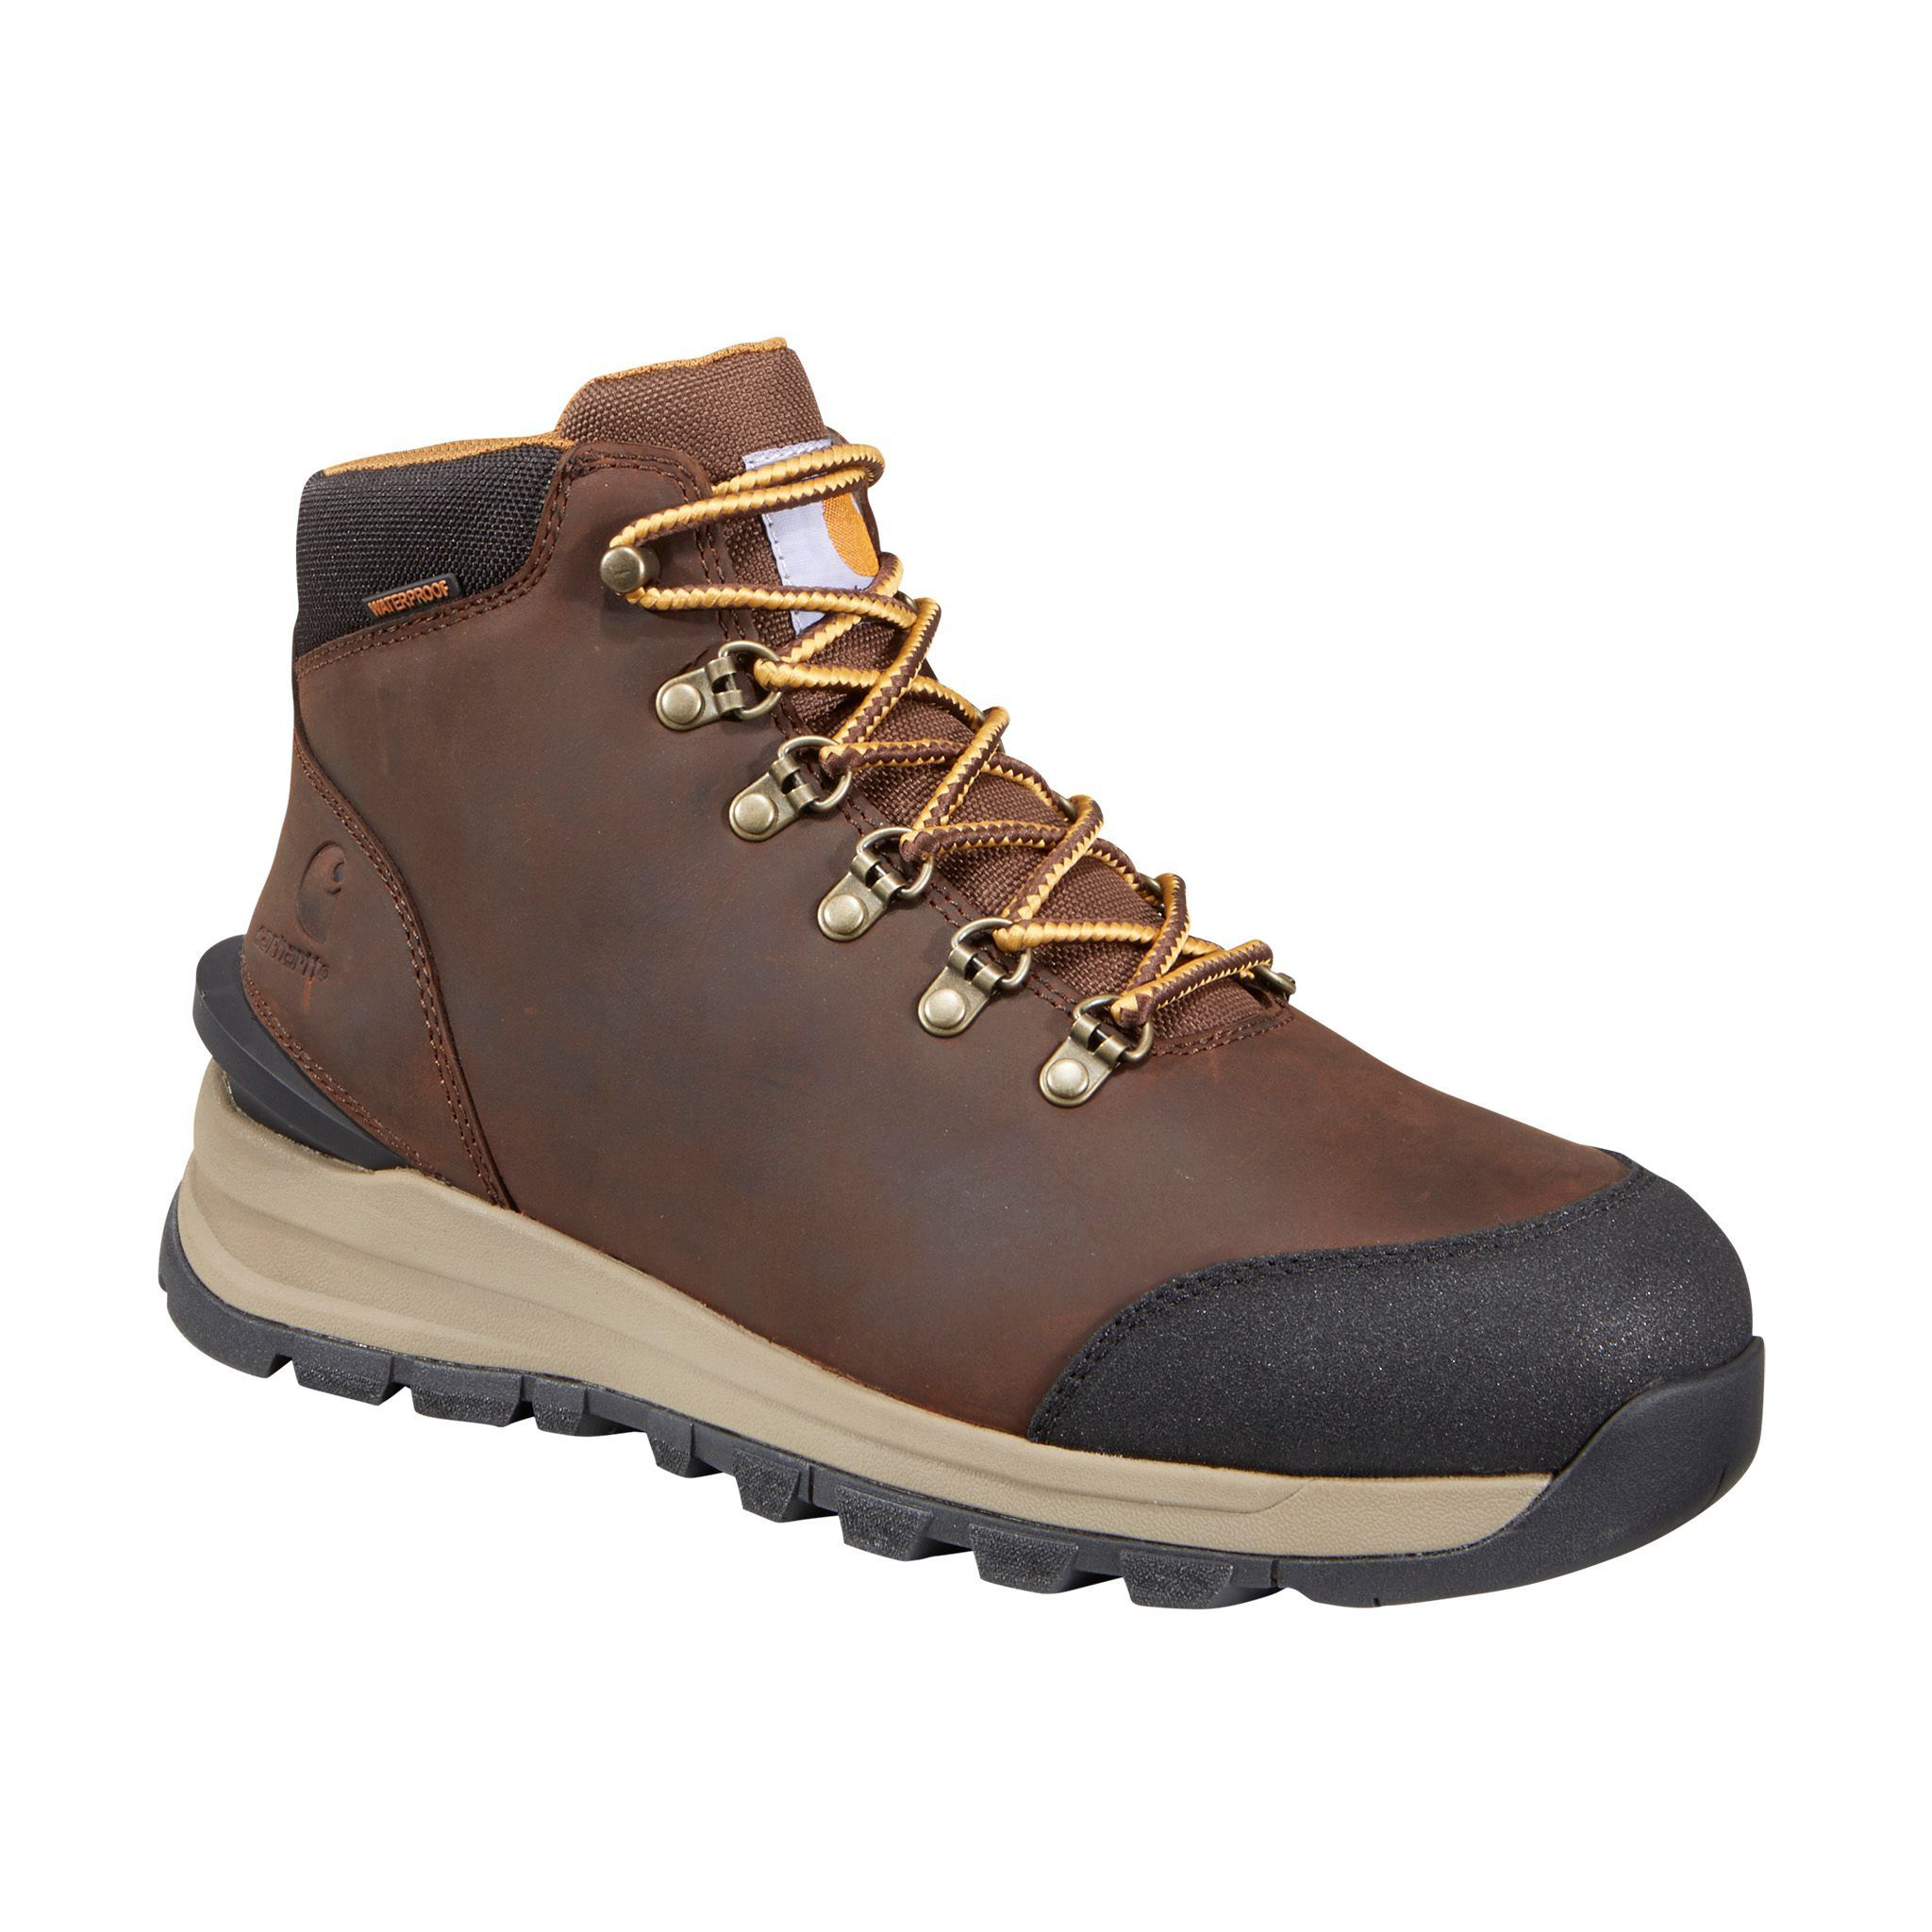 Carhartt Gilmore Waterproof Hiking Boots for Men - Dark Brown Oil Tanned - 13W